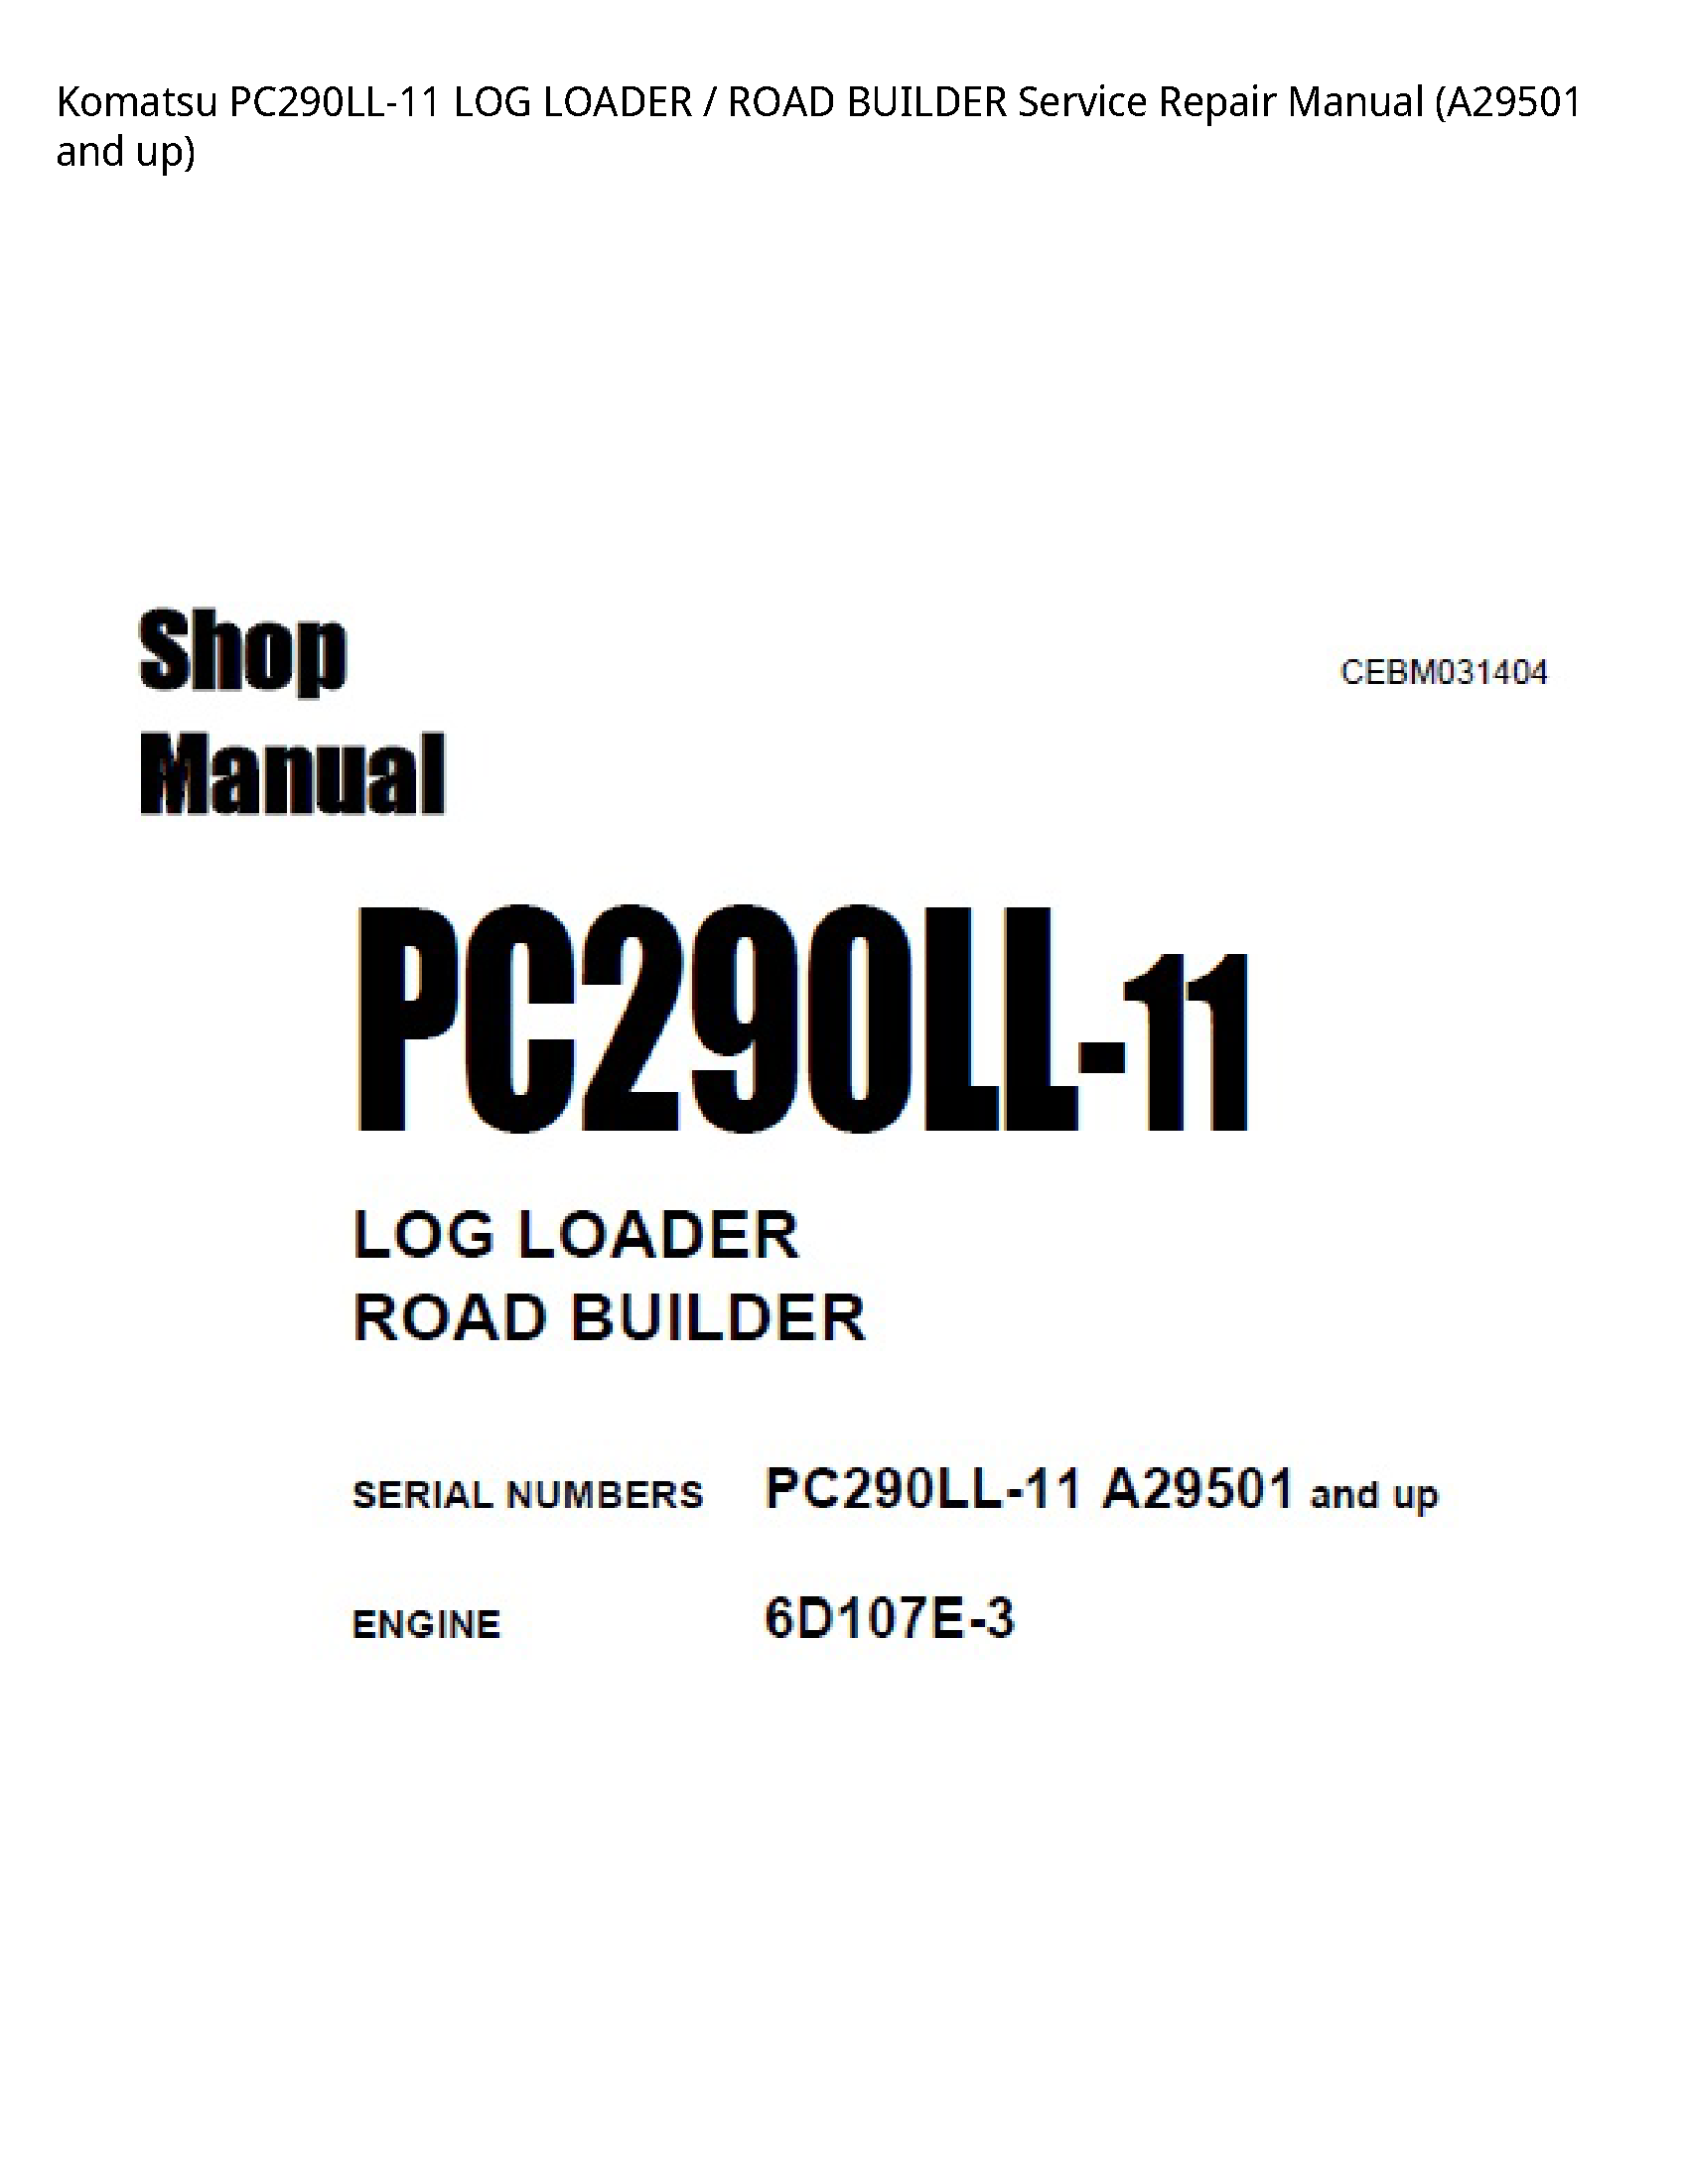 KOMATSU PC290LL-11 LOG LOADER ROAD BUILDER manual